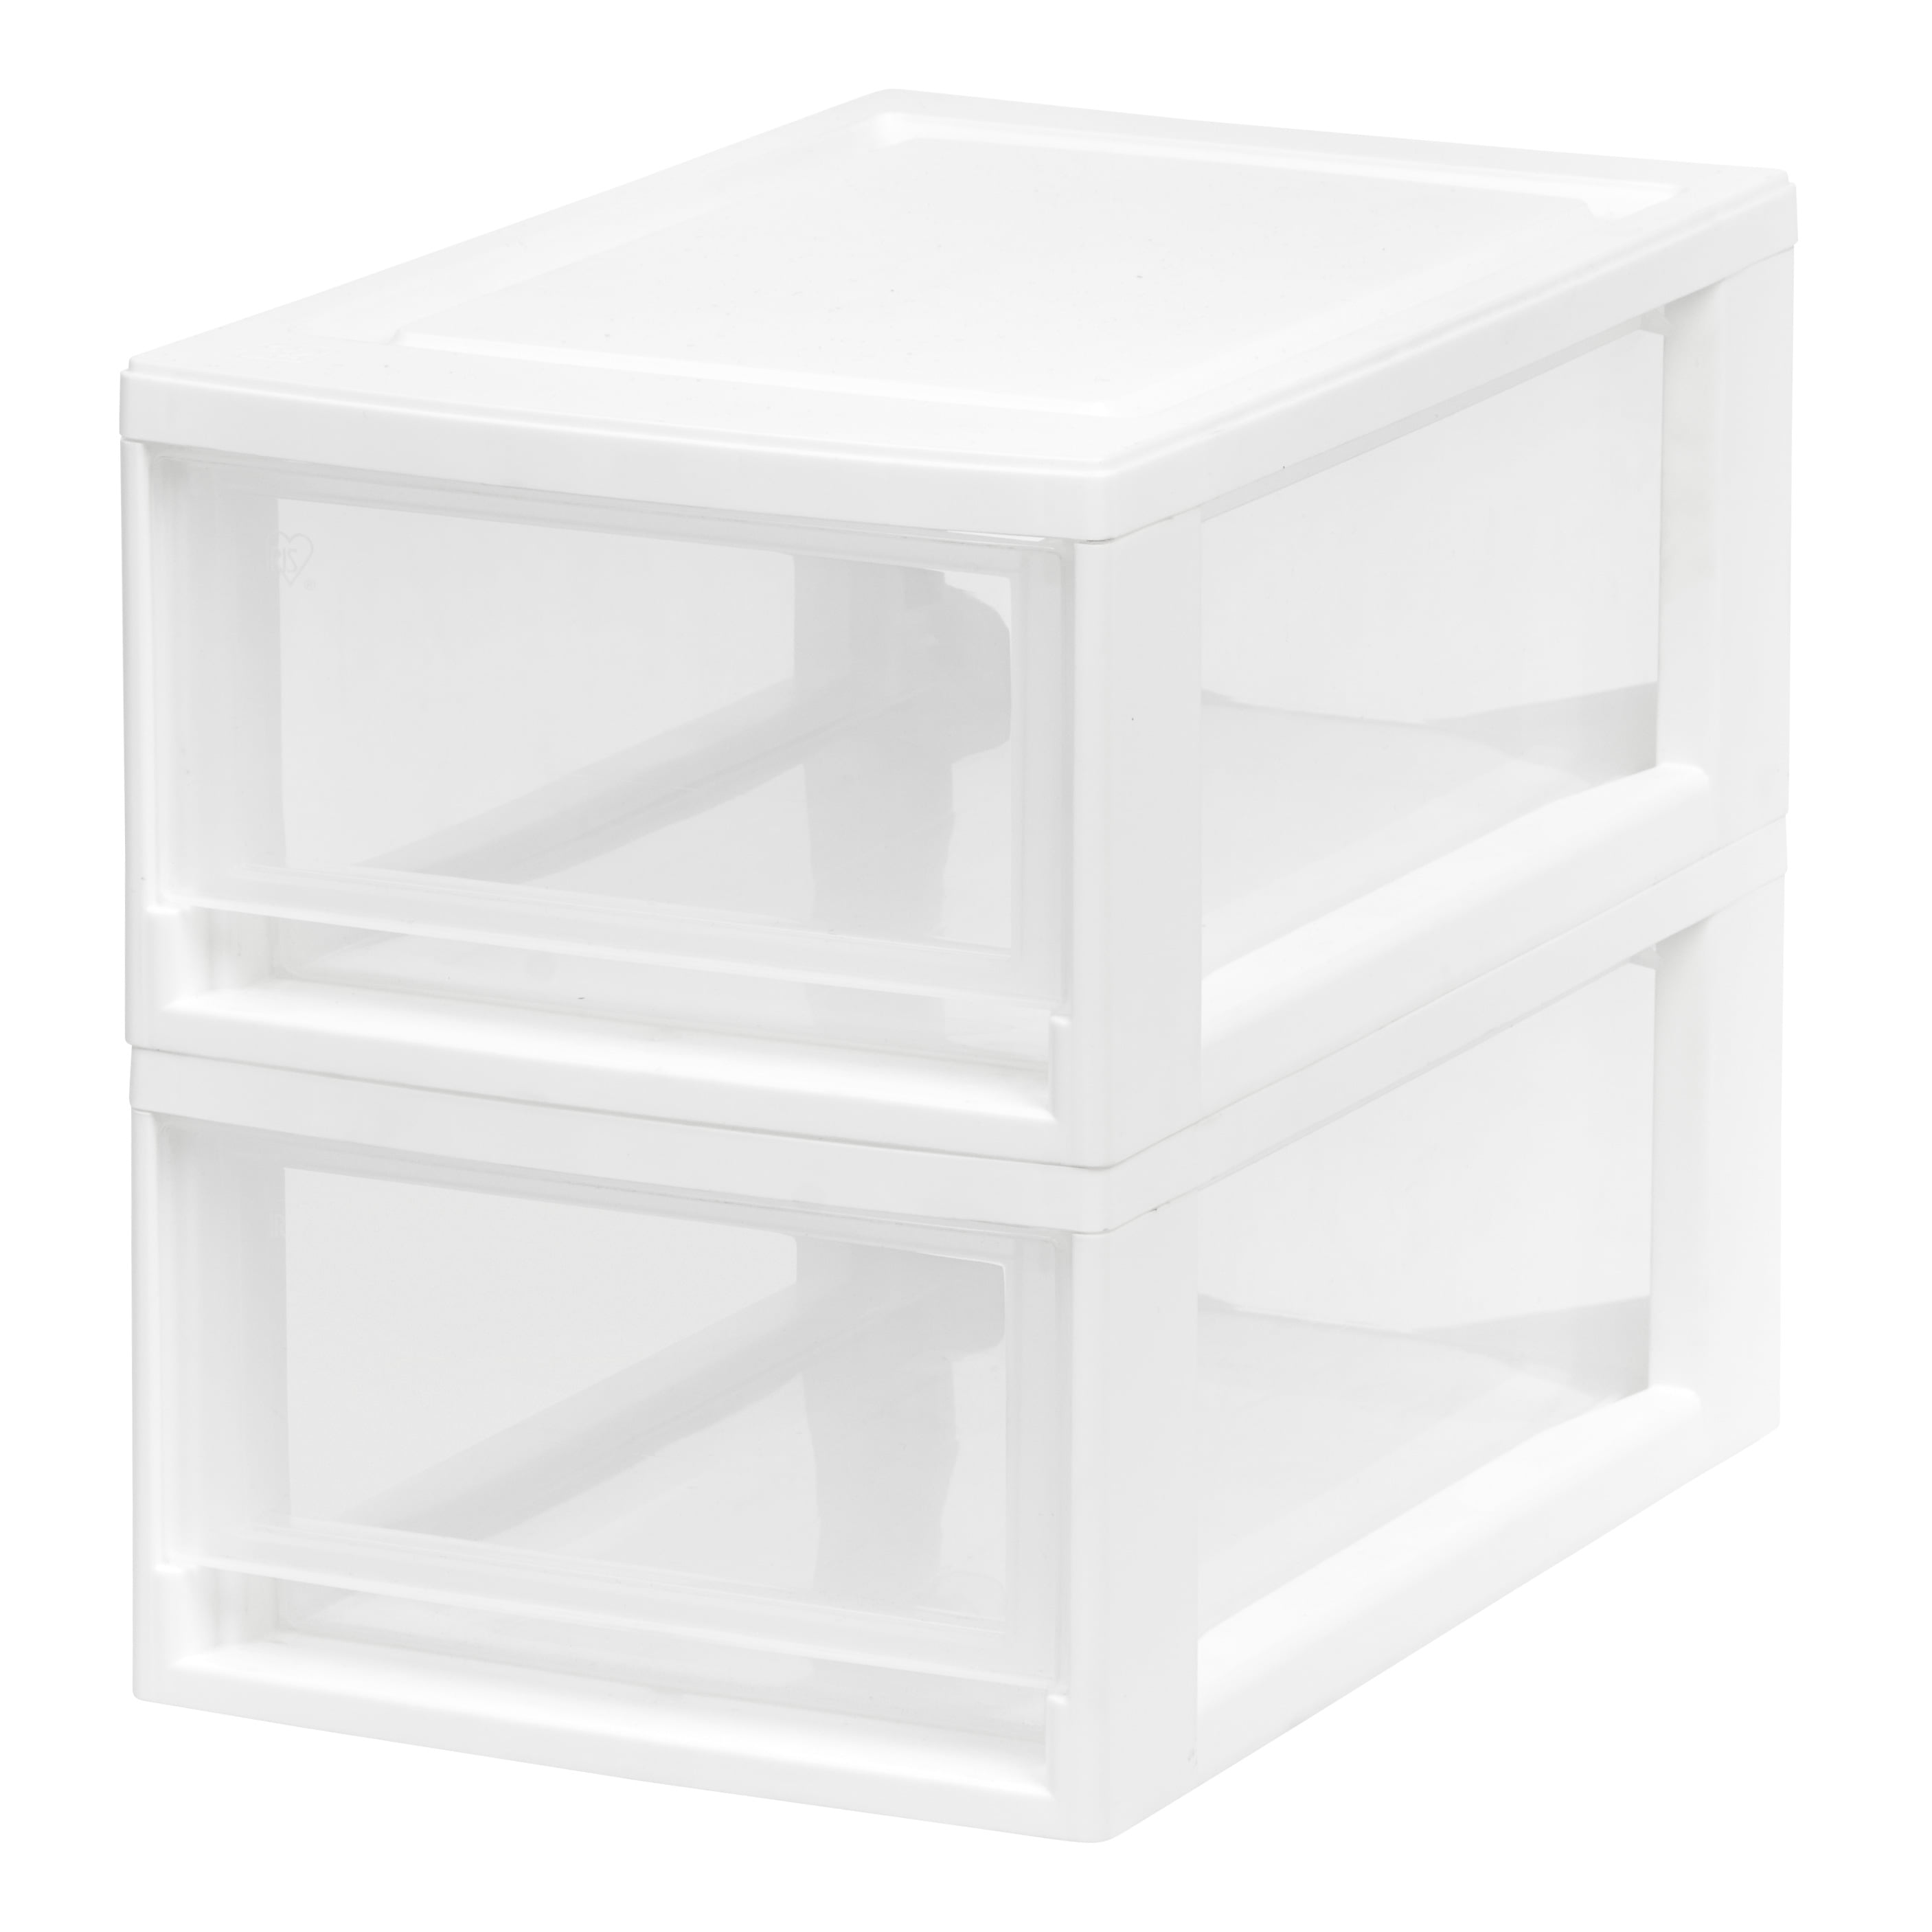 IRIS USA 6 QT Small Stacking Storage Drawer, White, 2 Pack